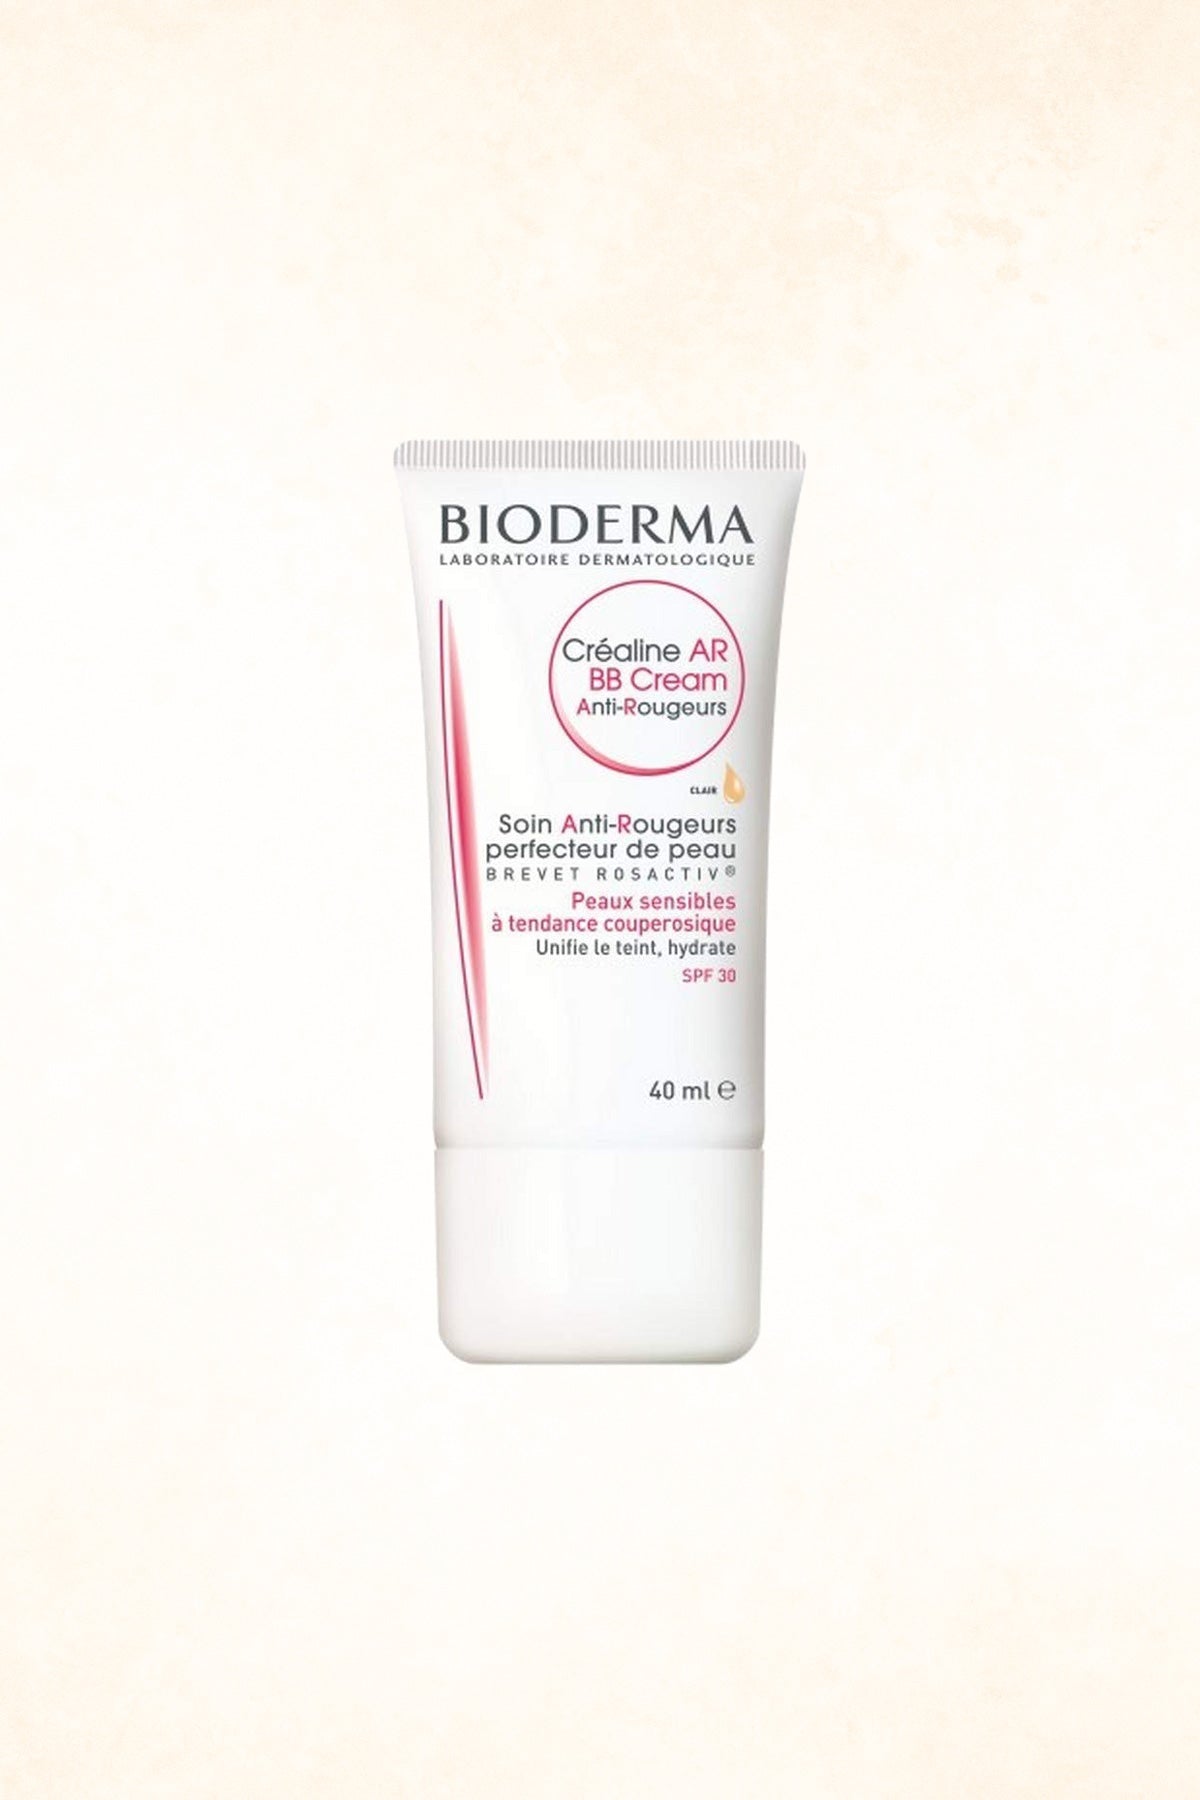 Bioderma – Créaline AR BB Cream 40 ml